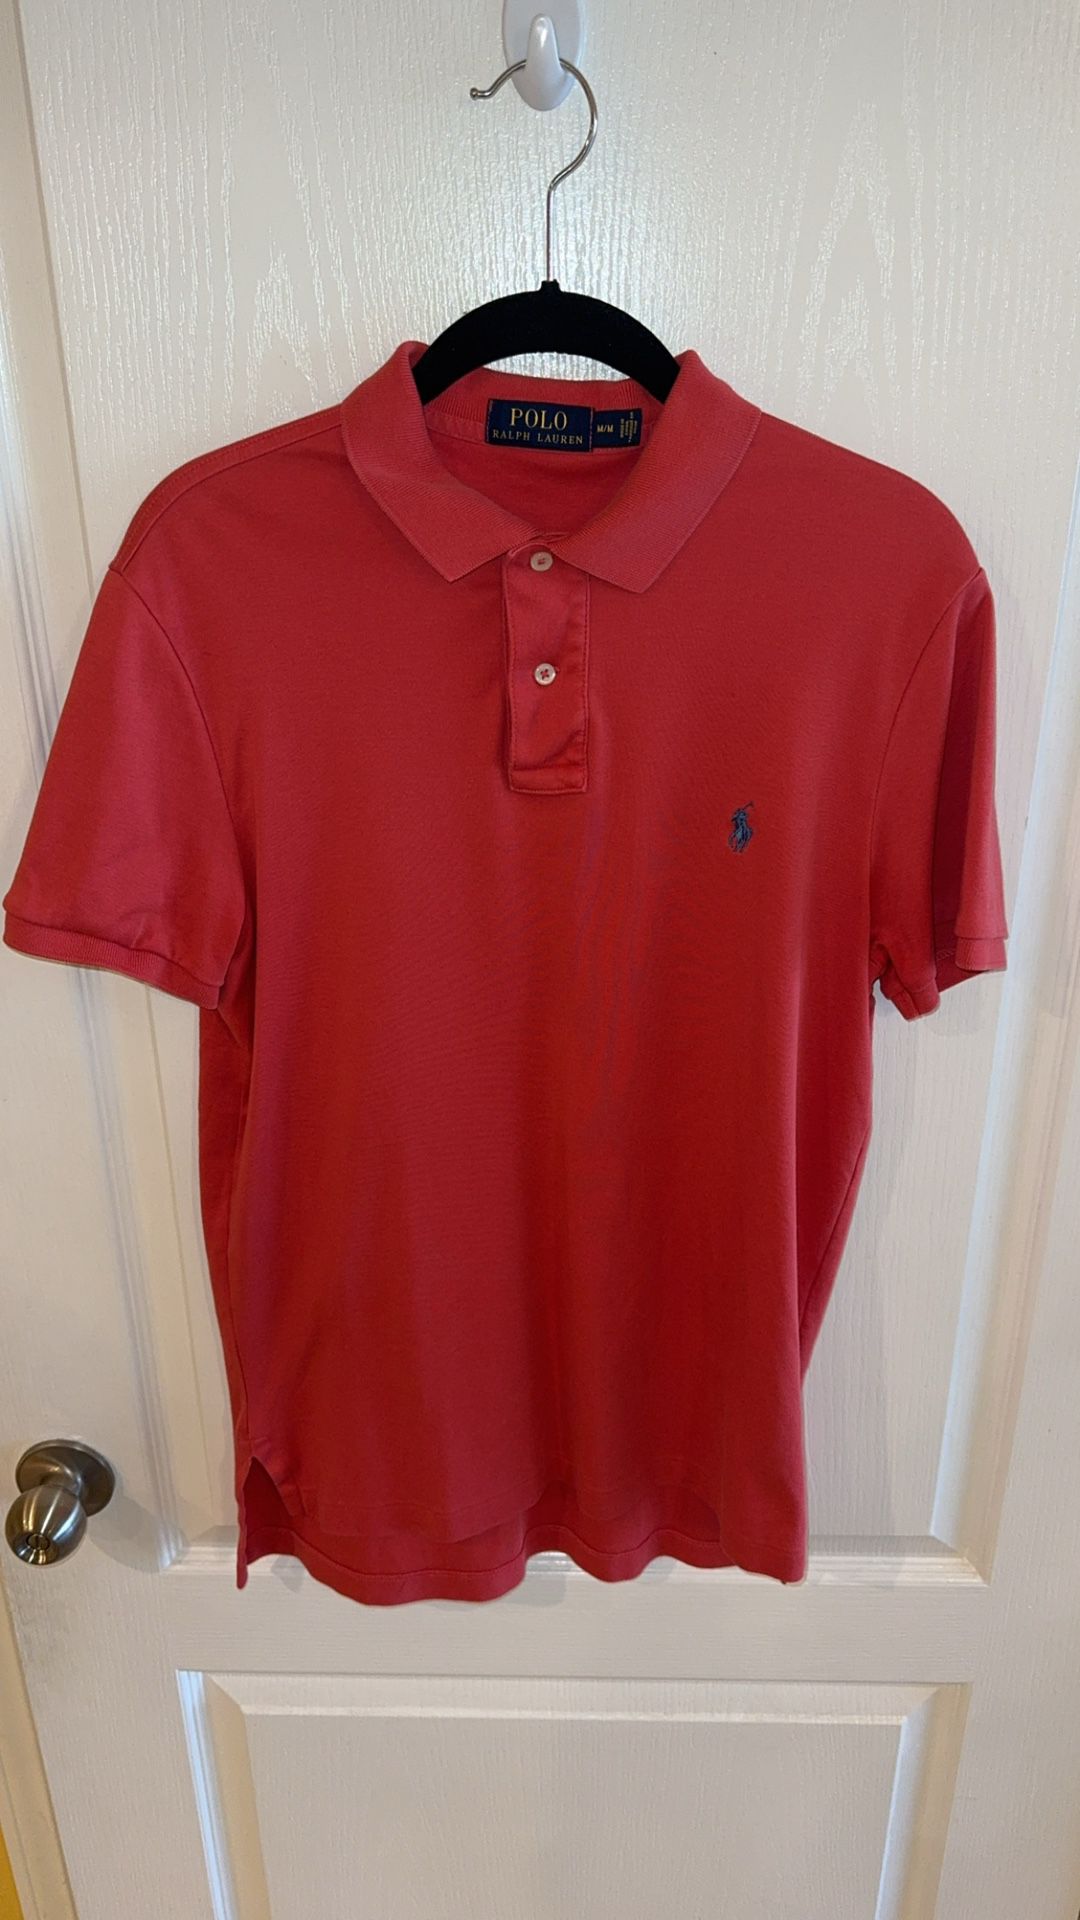 Ralph Lauren Polo collared shirt Red Size Adult Medium